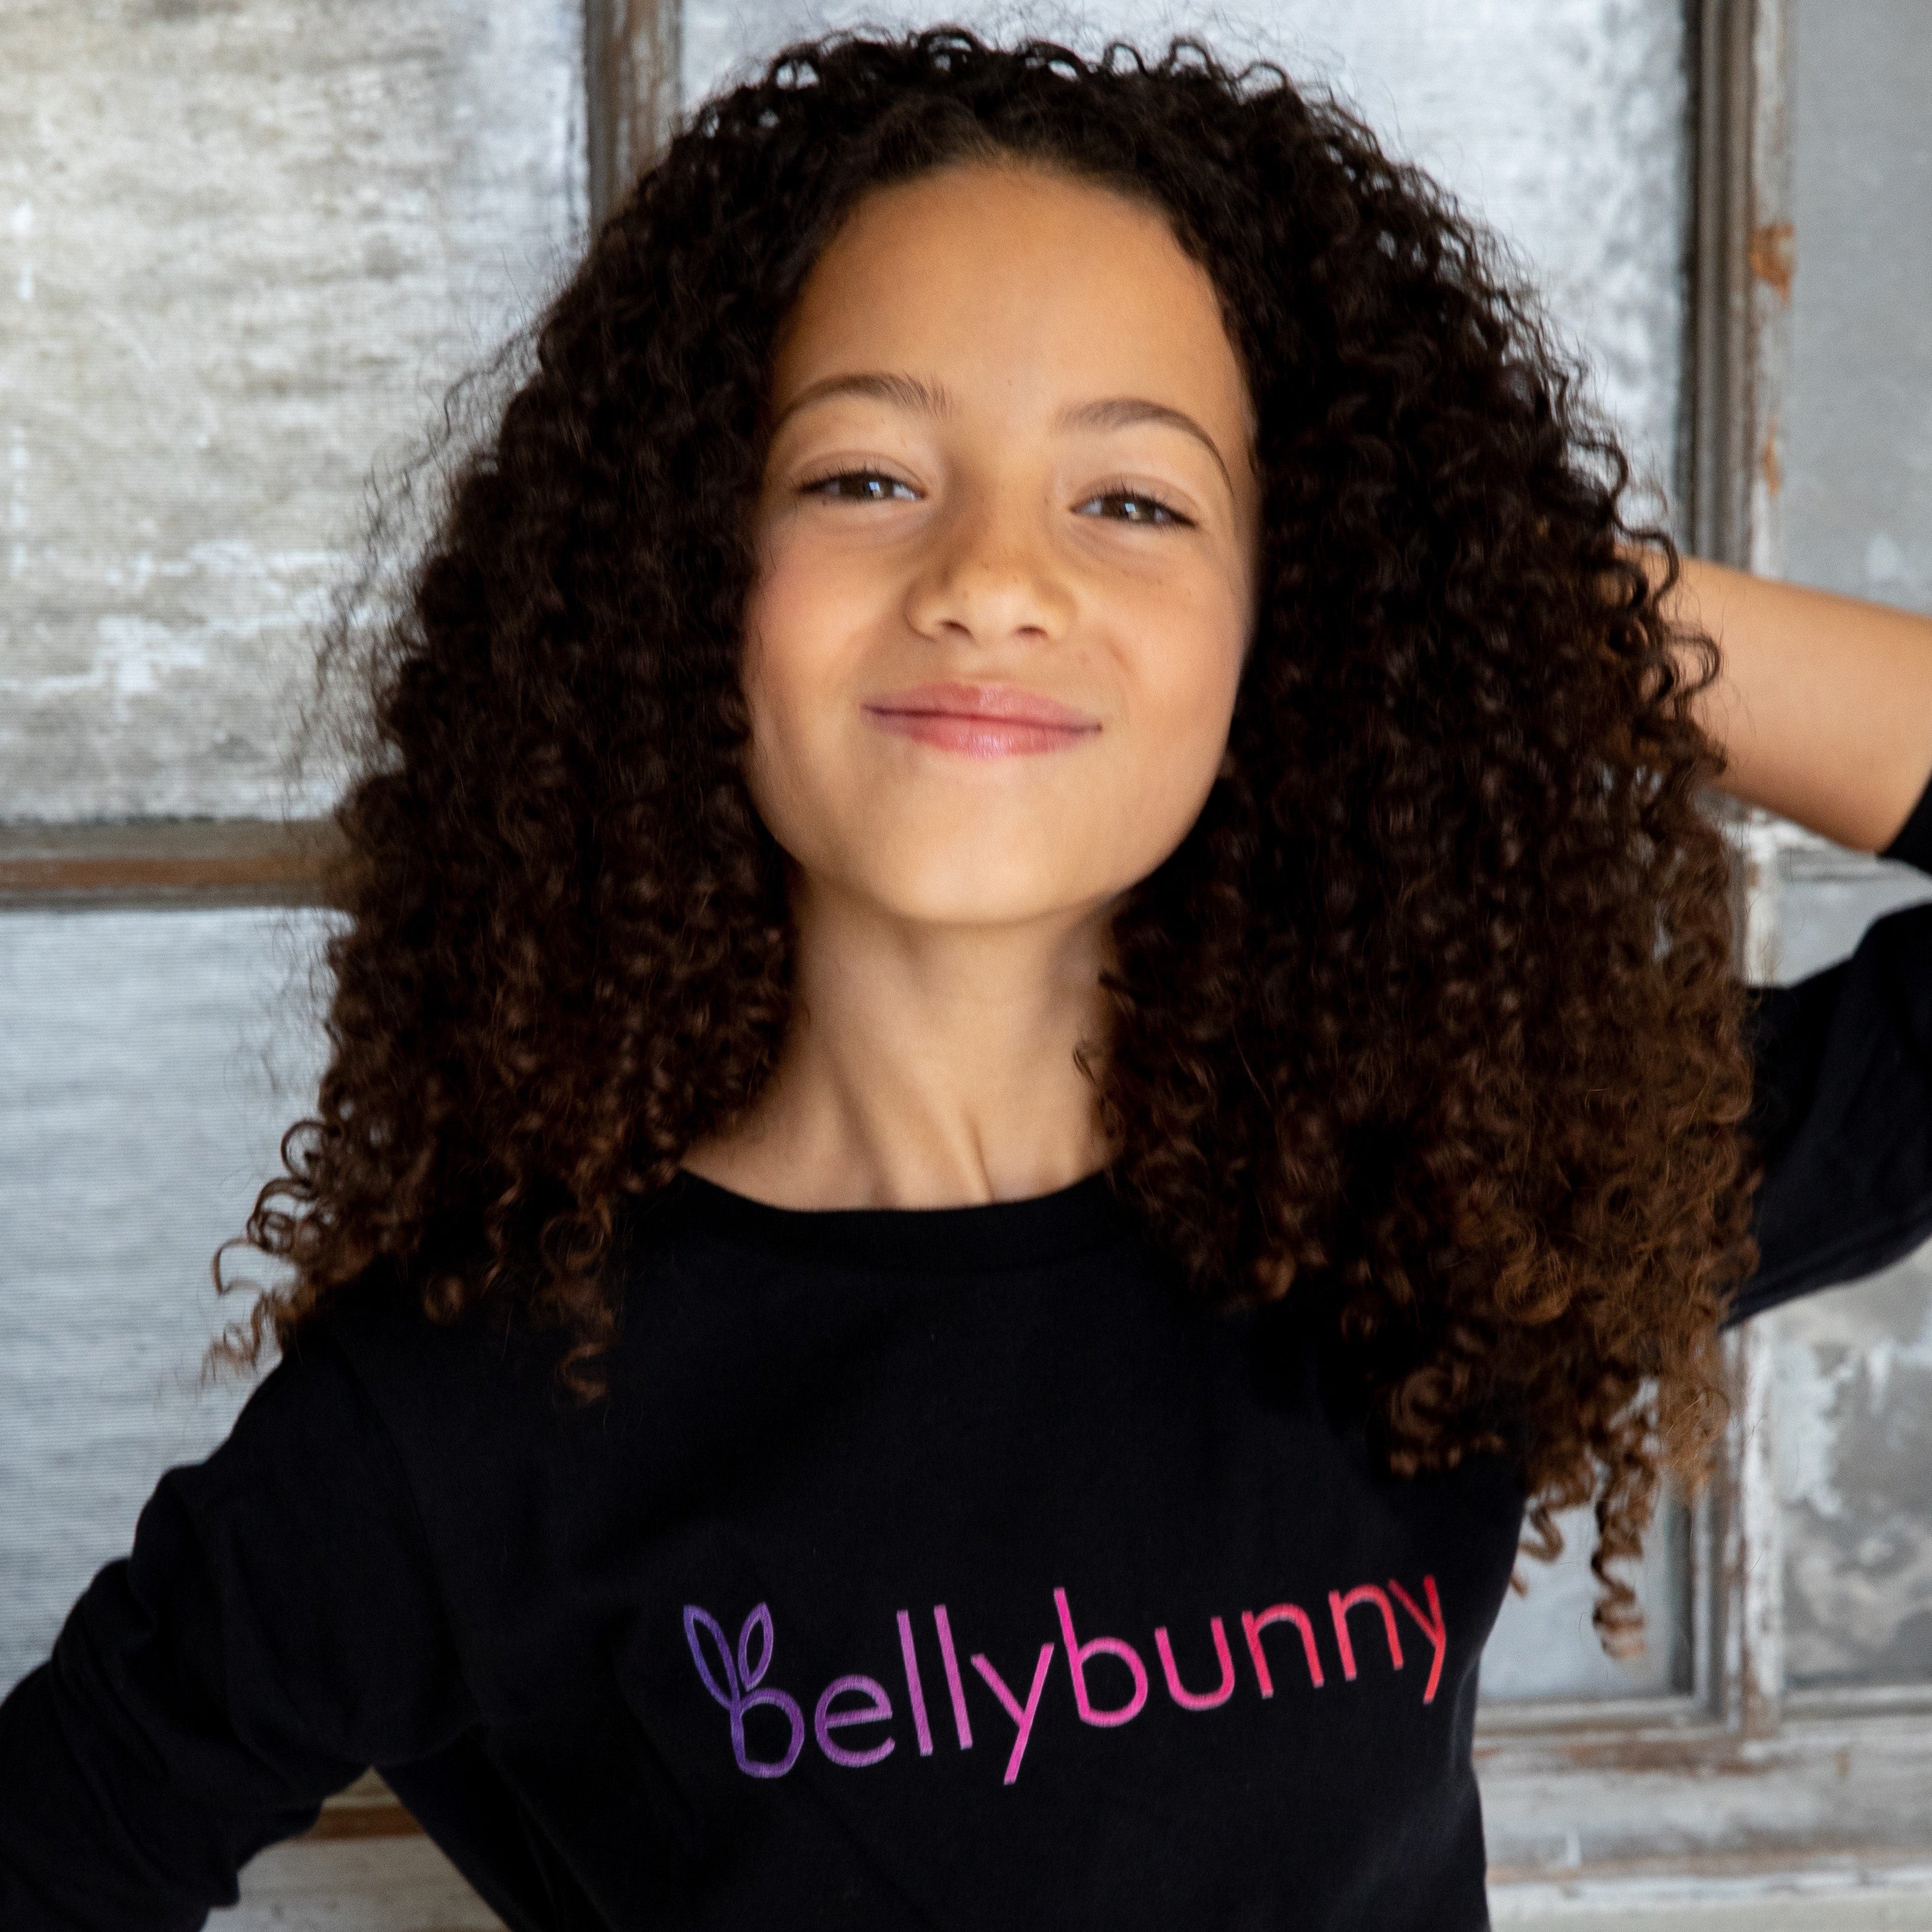 Bellybunny YOuth Long Sleeve Black T-shrit with rainbow logo